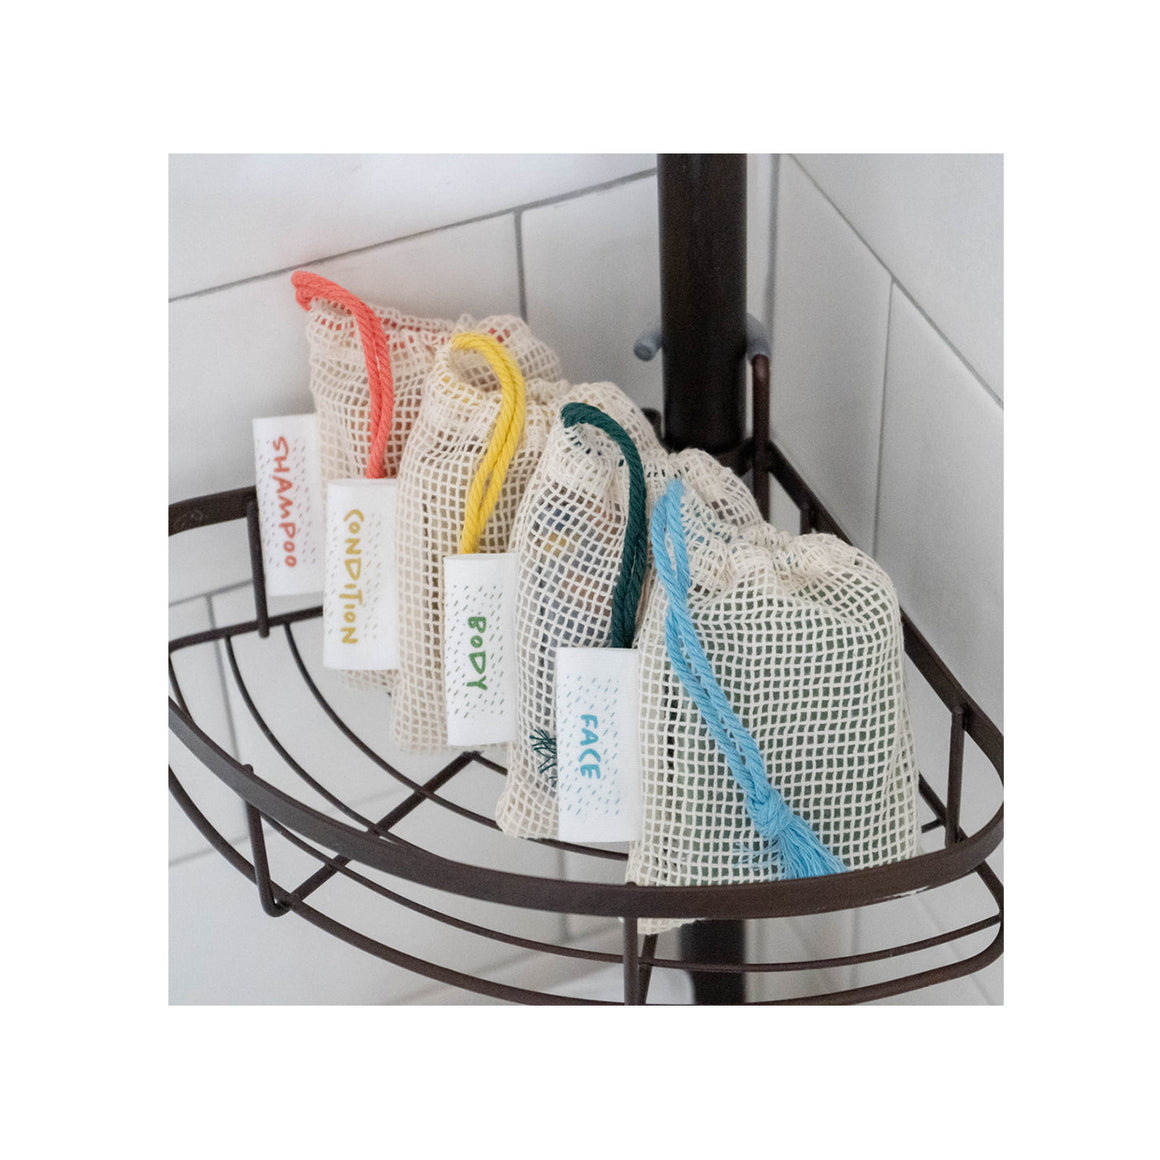 ORGANIC SOAP SAVER BAGS: Face, Body, Shampoo, Conditioner